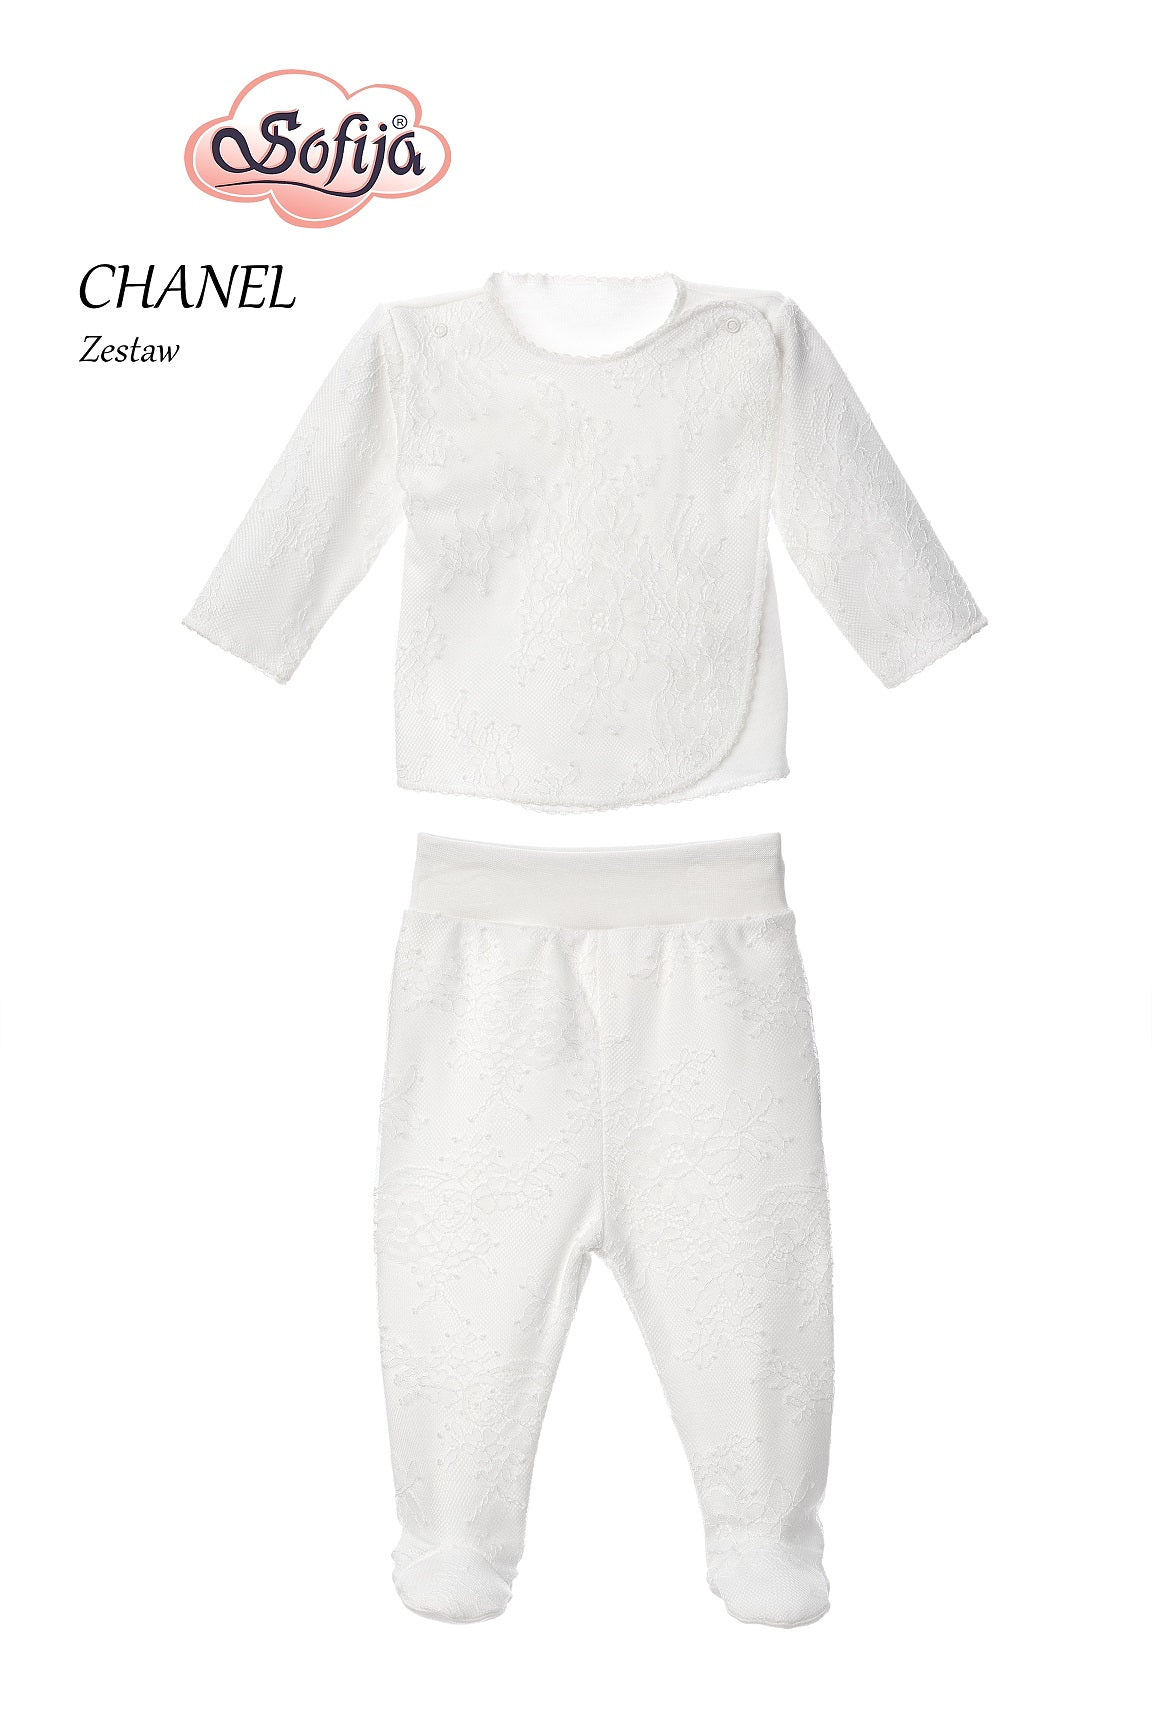 Sofija Chanel Cream Lace Girls Trouser Set 